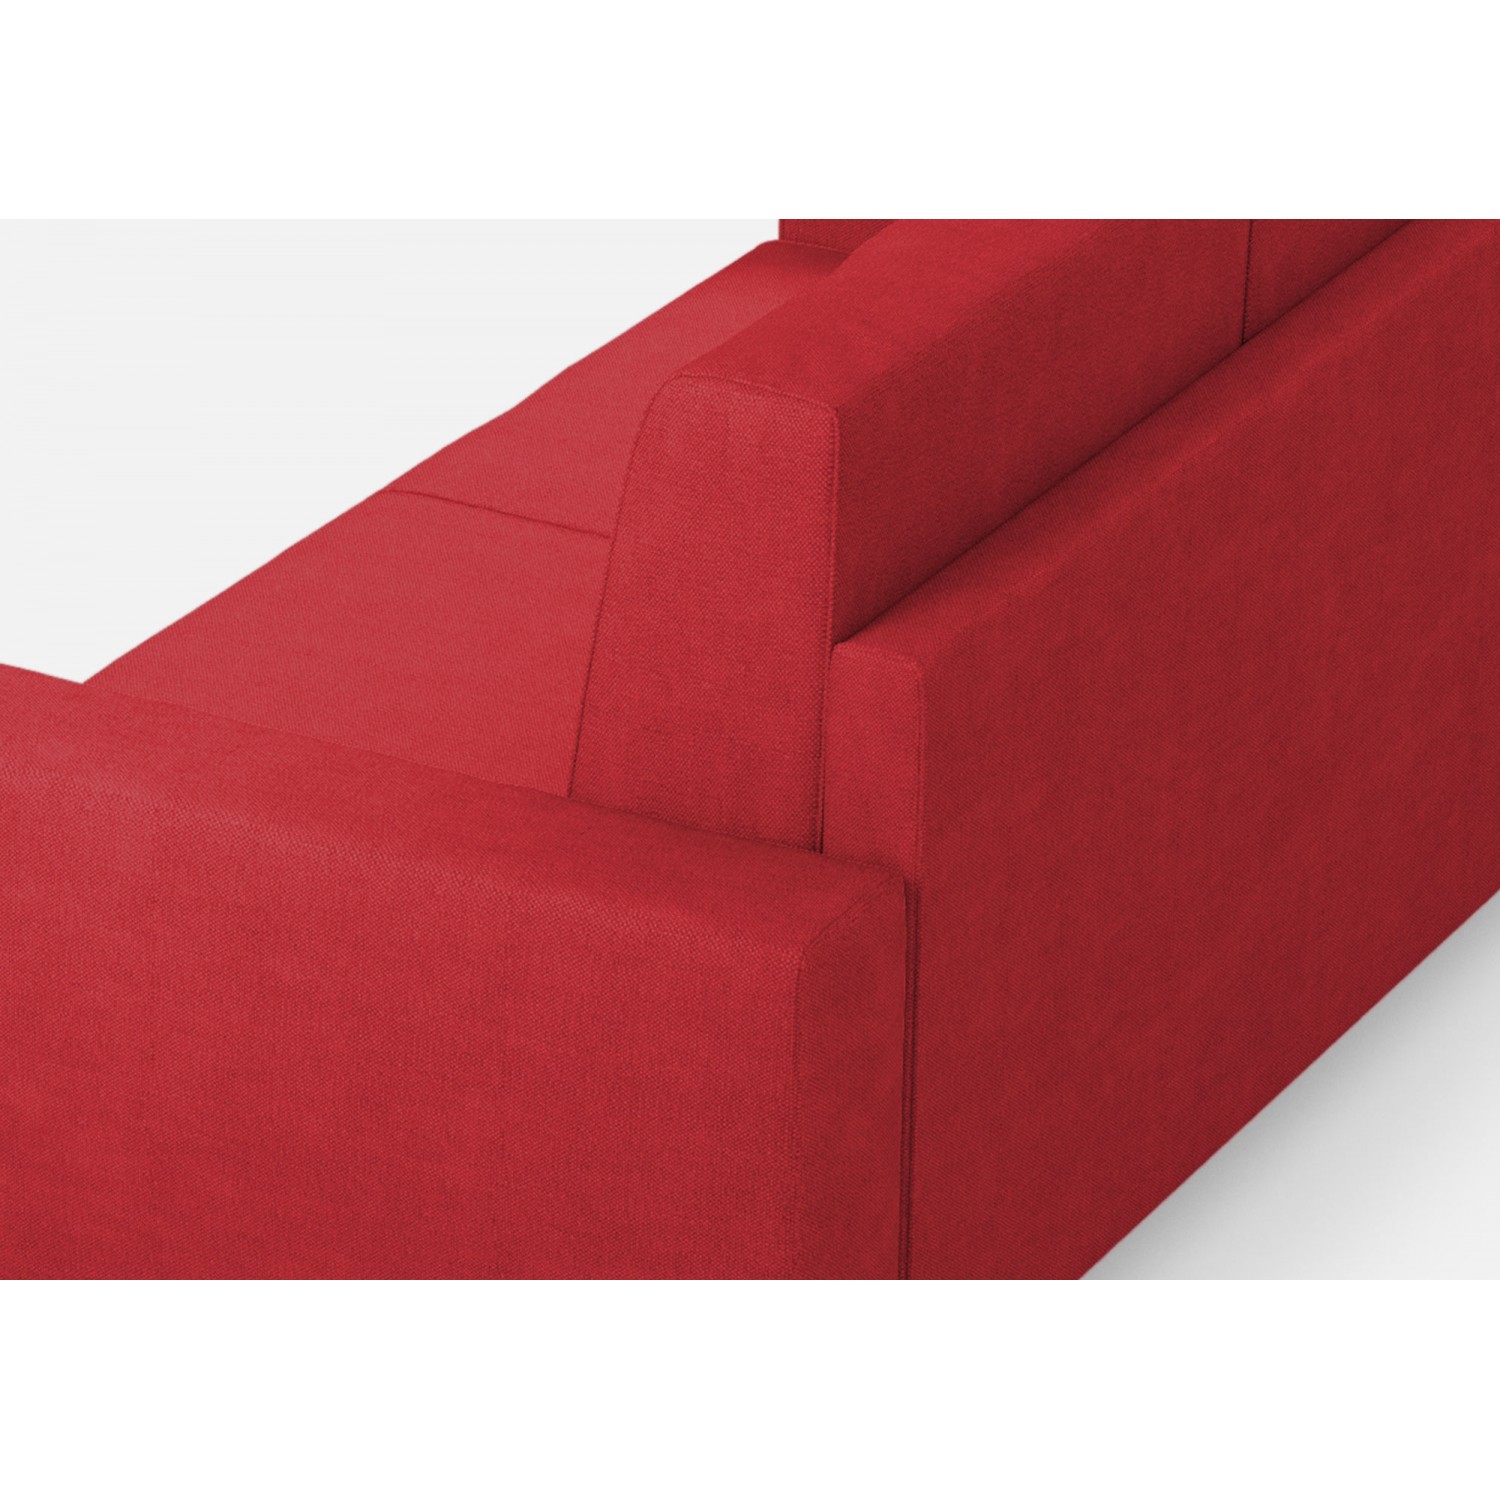 Ityhome Divano Sakar 2 posti medio (due sedute da 70cm) + angolo + divano 2 posti medio (due sedute da 70cm) misure esterne L.246x246 colore rosso